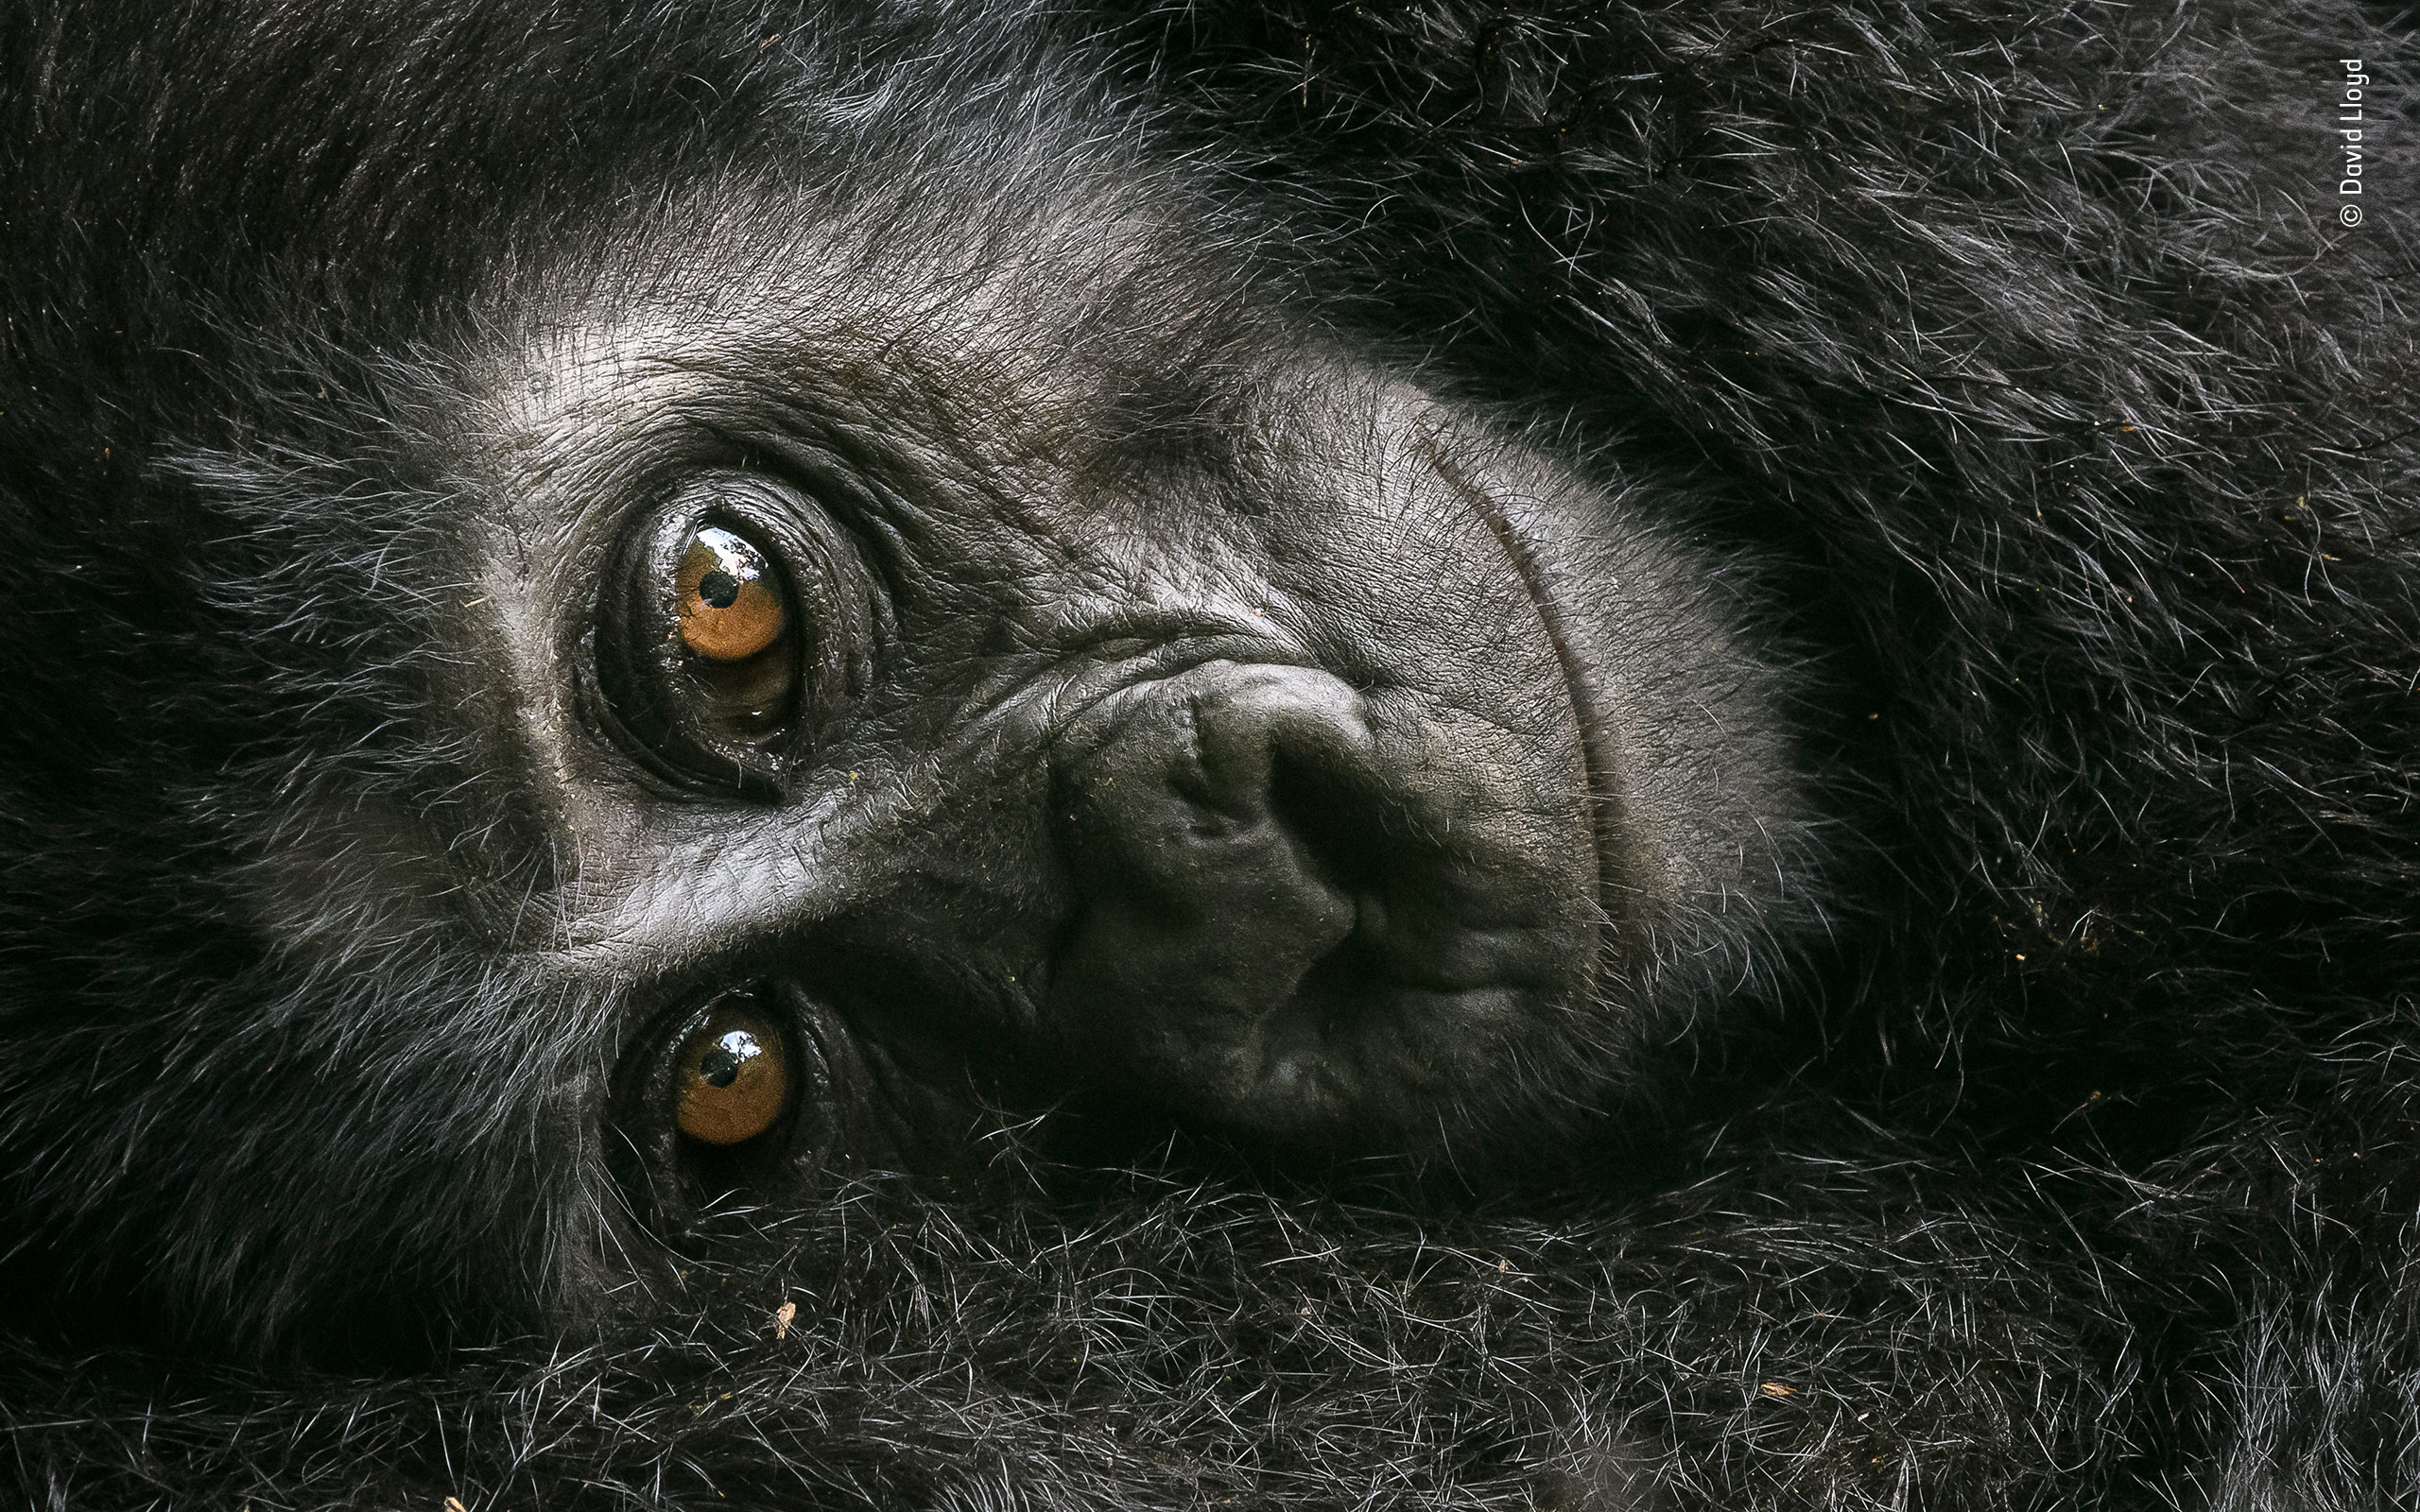 A gorilla gazes into the camera